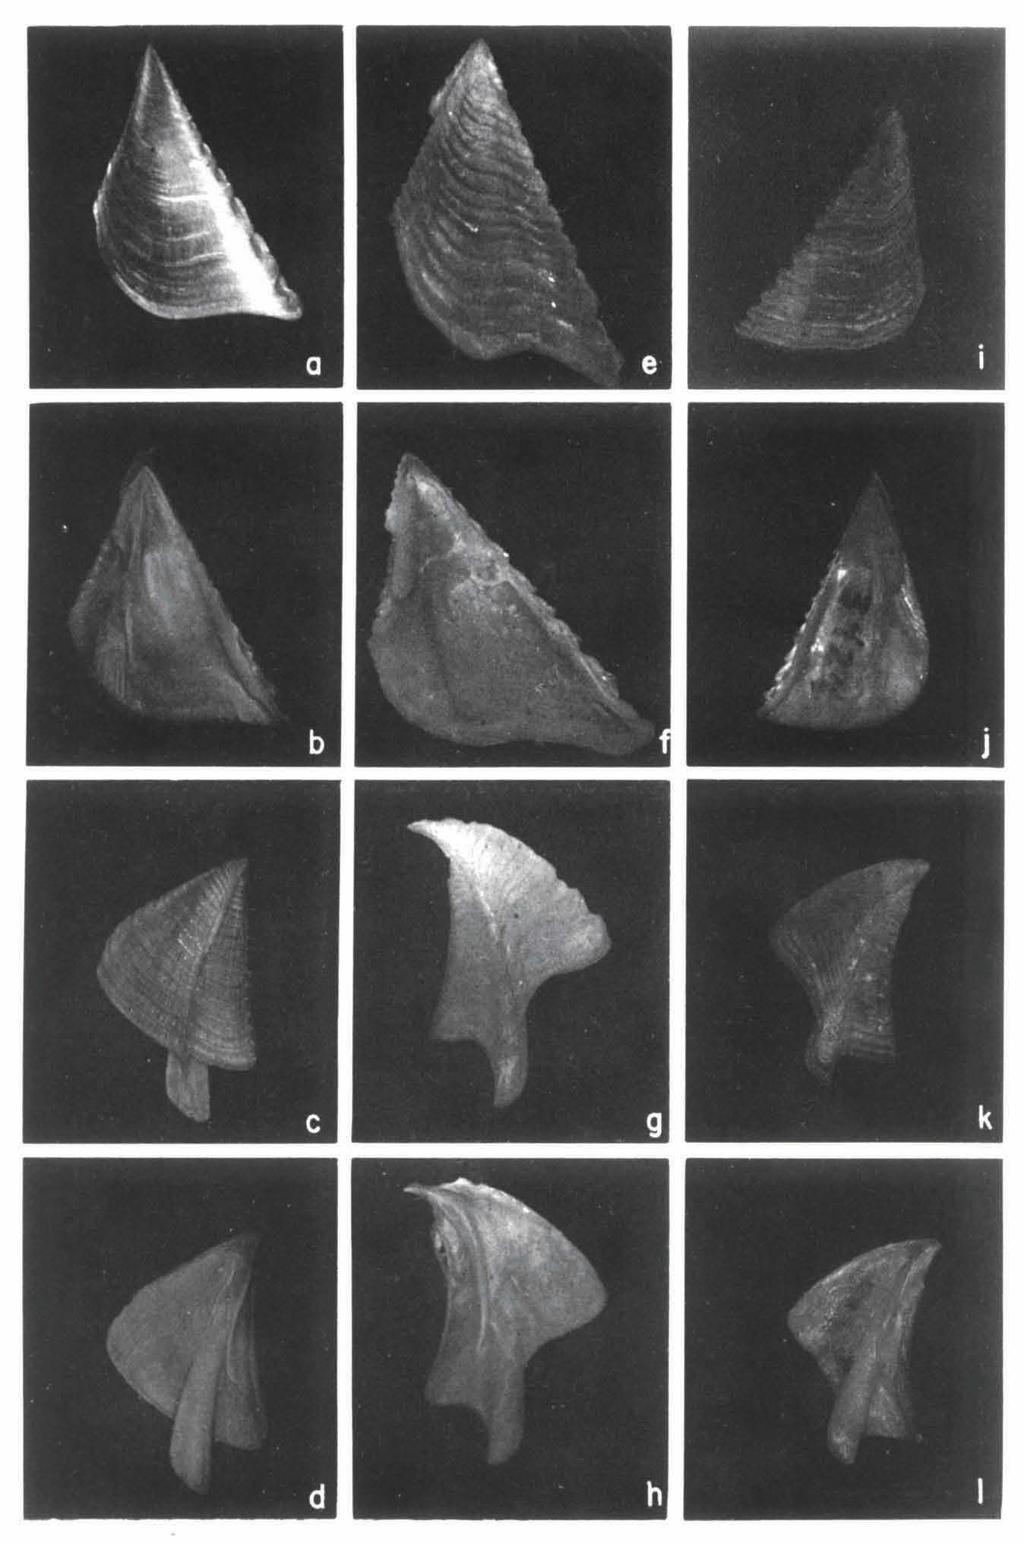 38 ZOOLOGISCHE VERHANDELINGEN 235 (1986) Fig. 10. Megabalanus rosa (Pilsbry). a-d, external and internal views of opercular valves (Japan, USNM 177932). Megabalanus spinosus (Bruguiere).